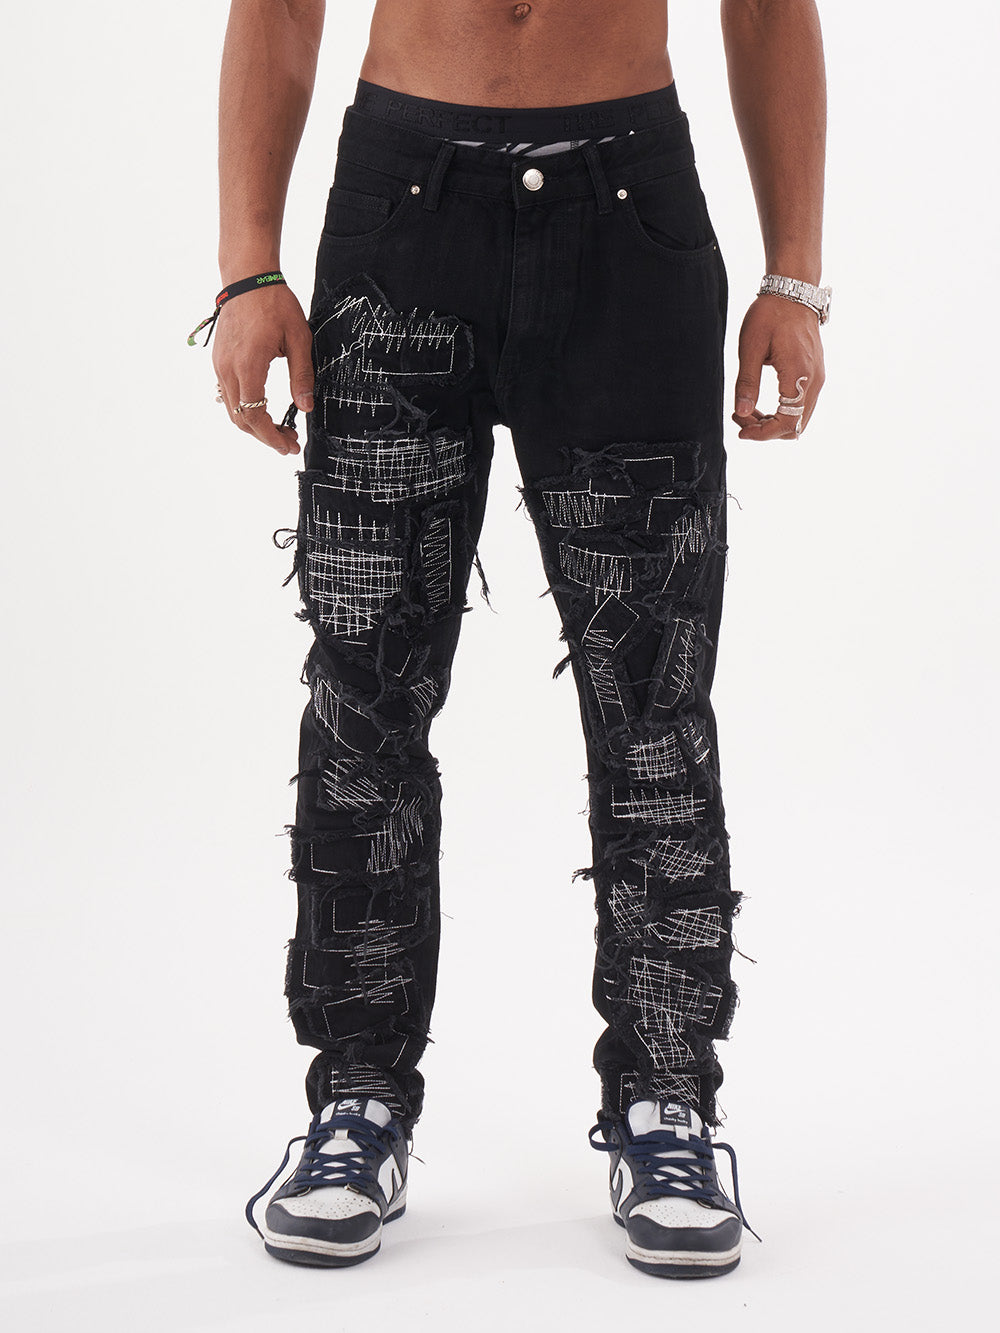 Lower body shot of a man in a black color BLUEPRINT streetwear jeans by SERNES